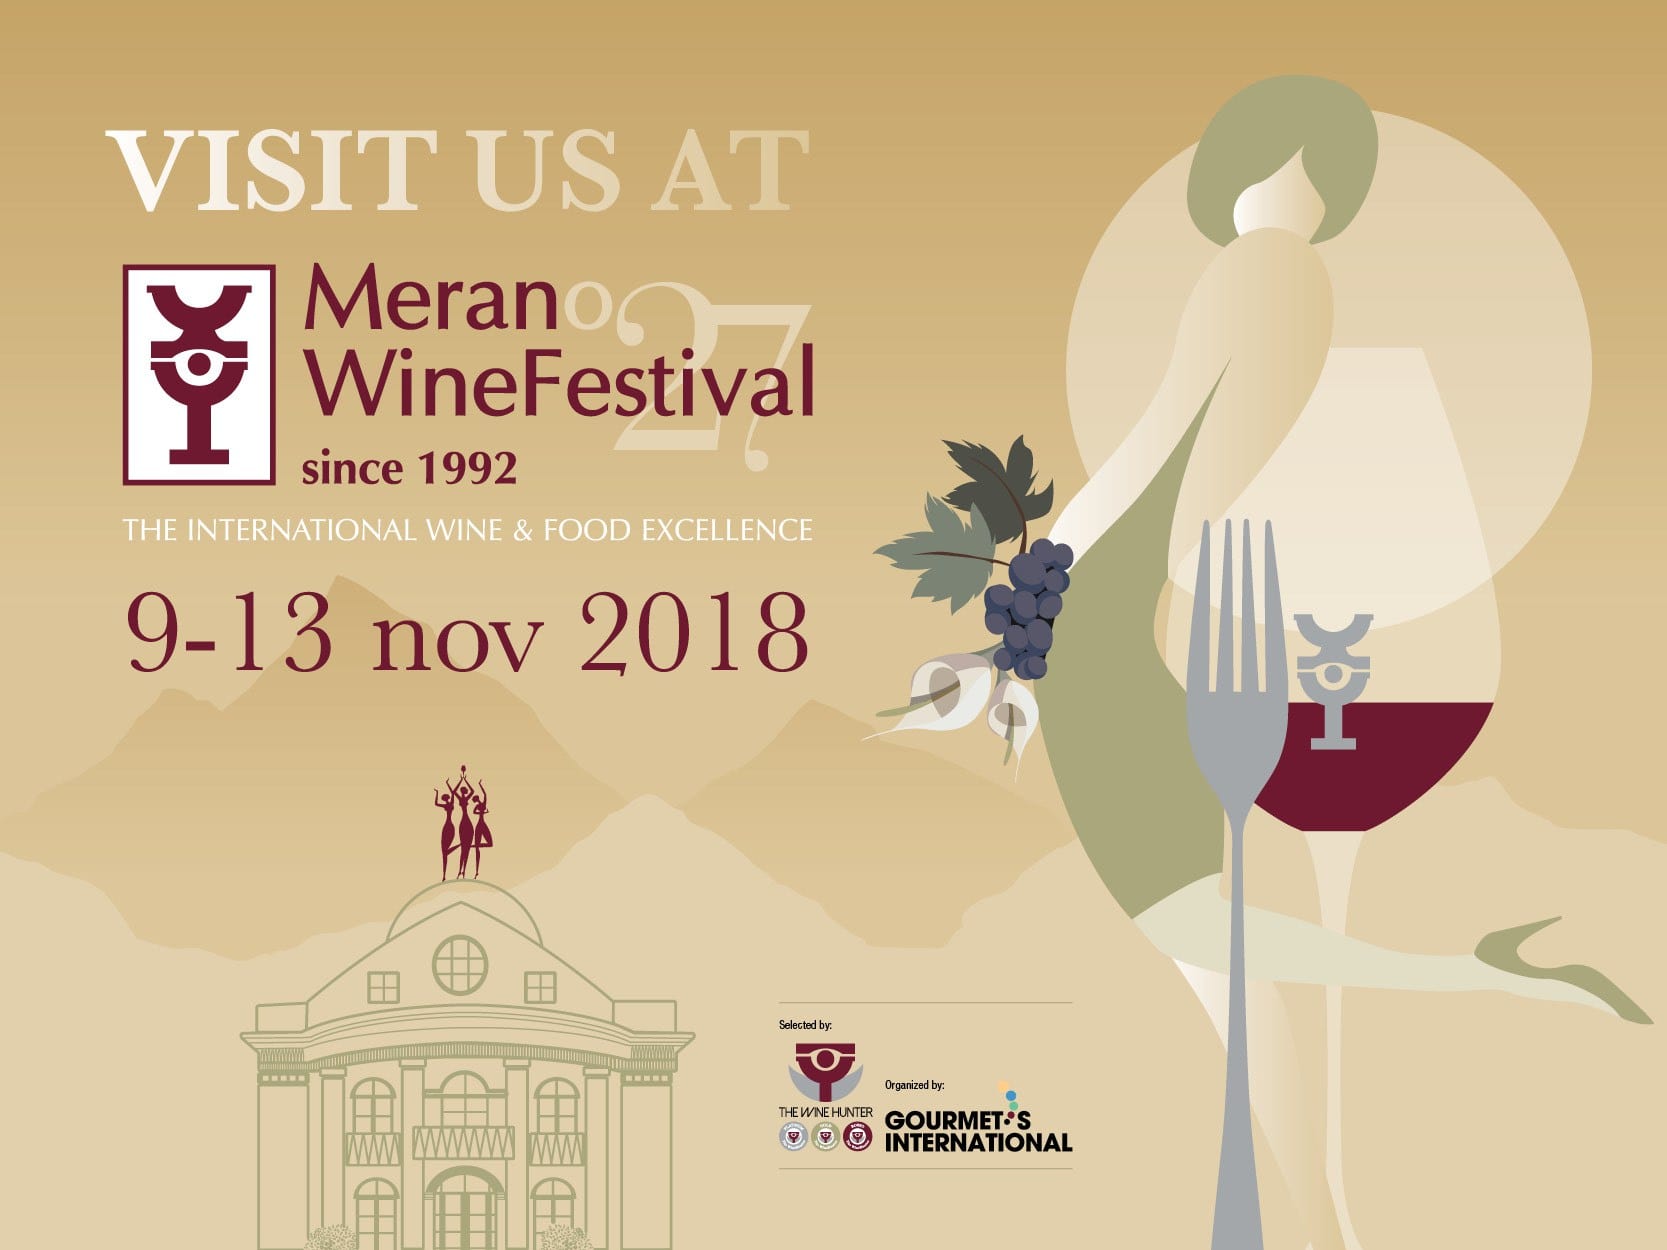 Vado al Merano wine festival 2018